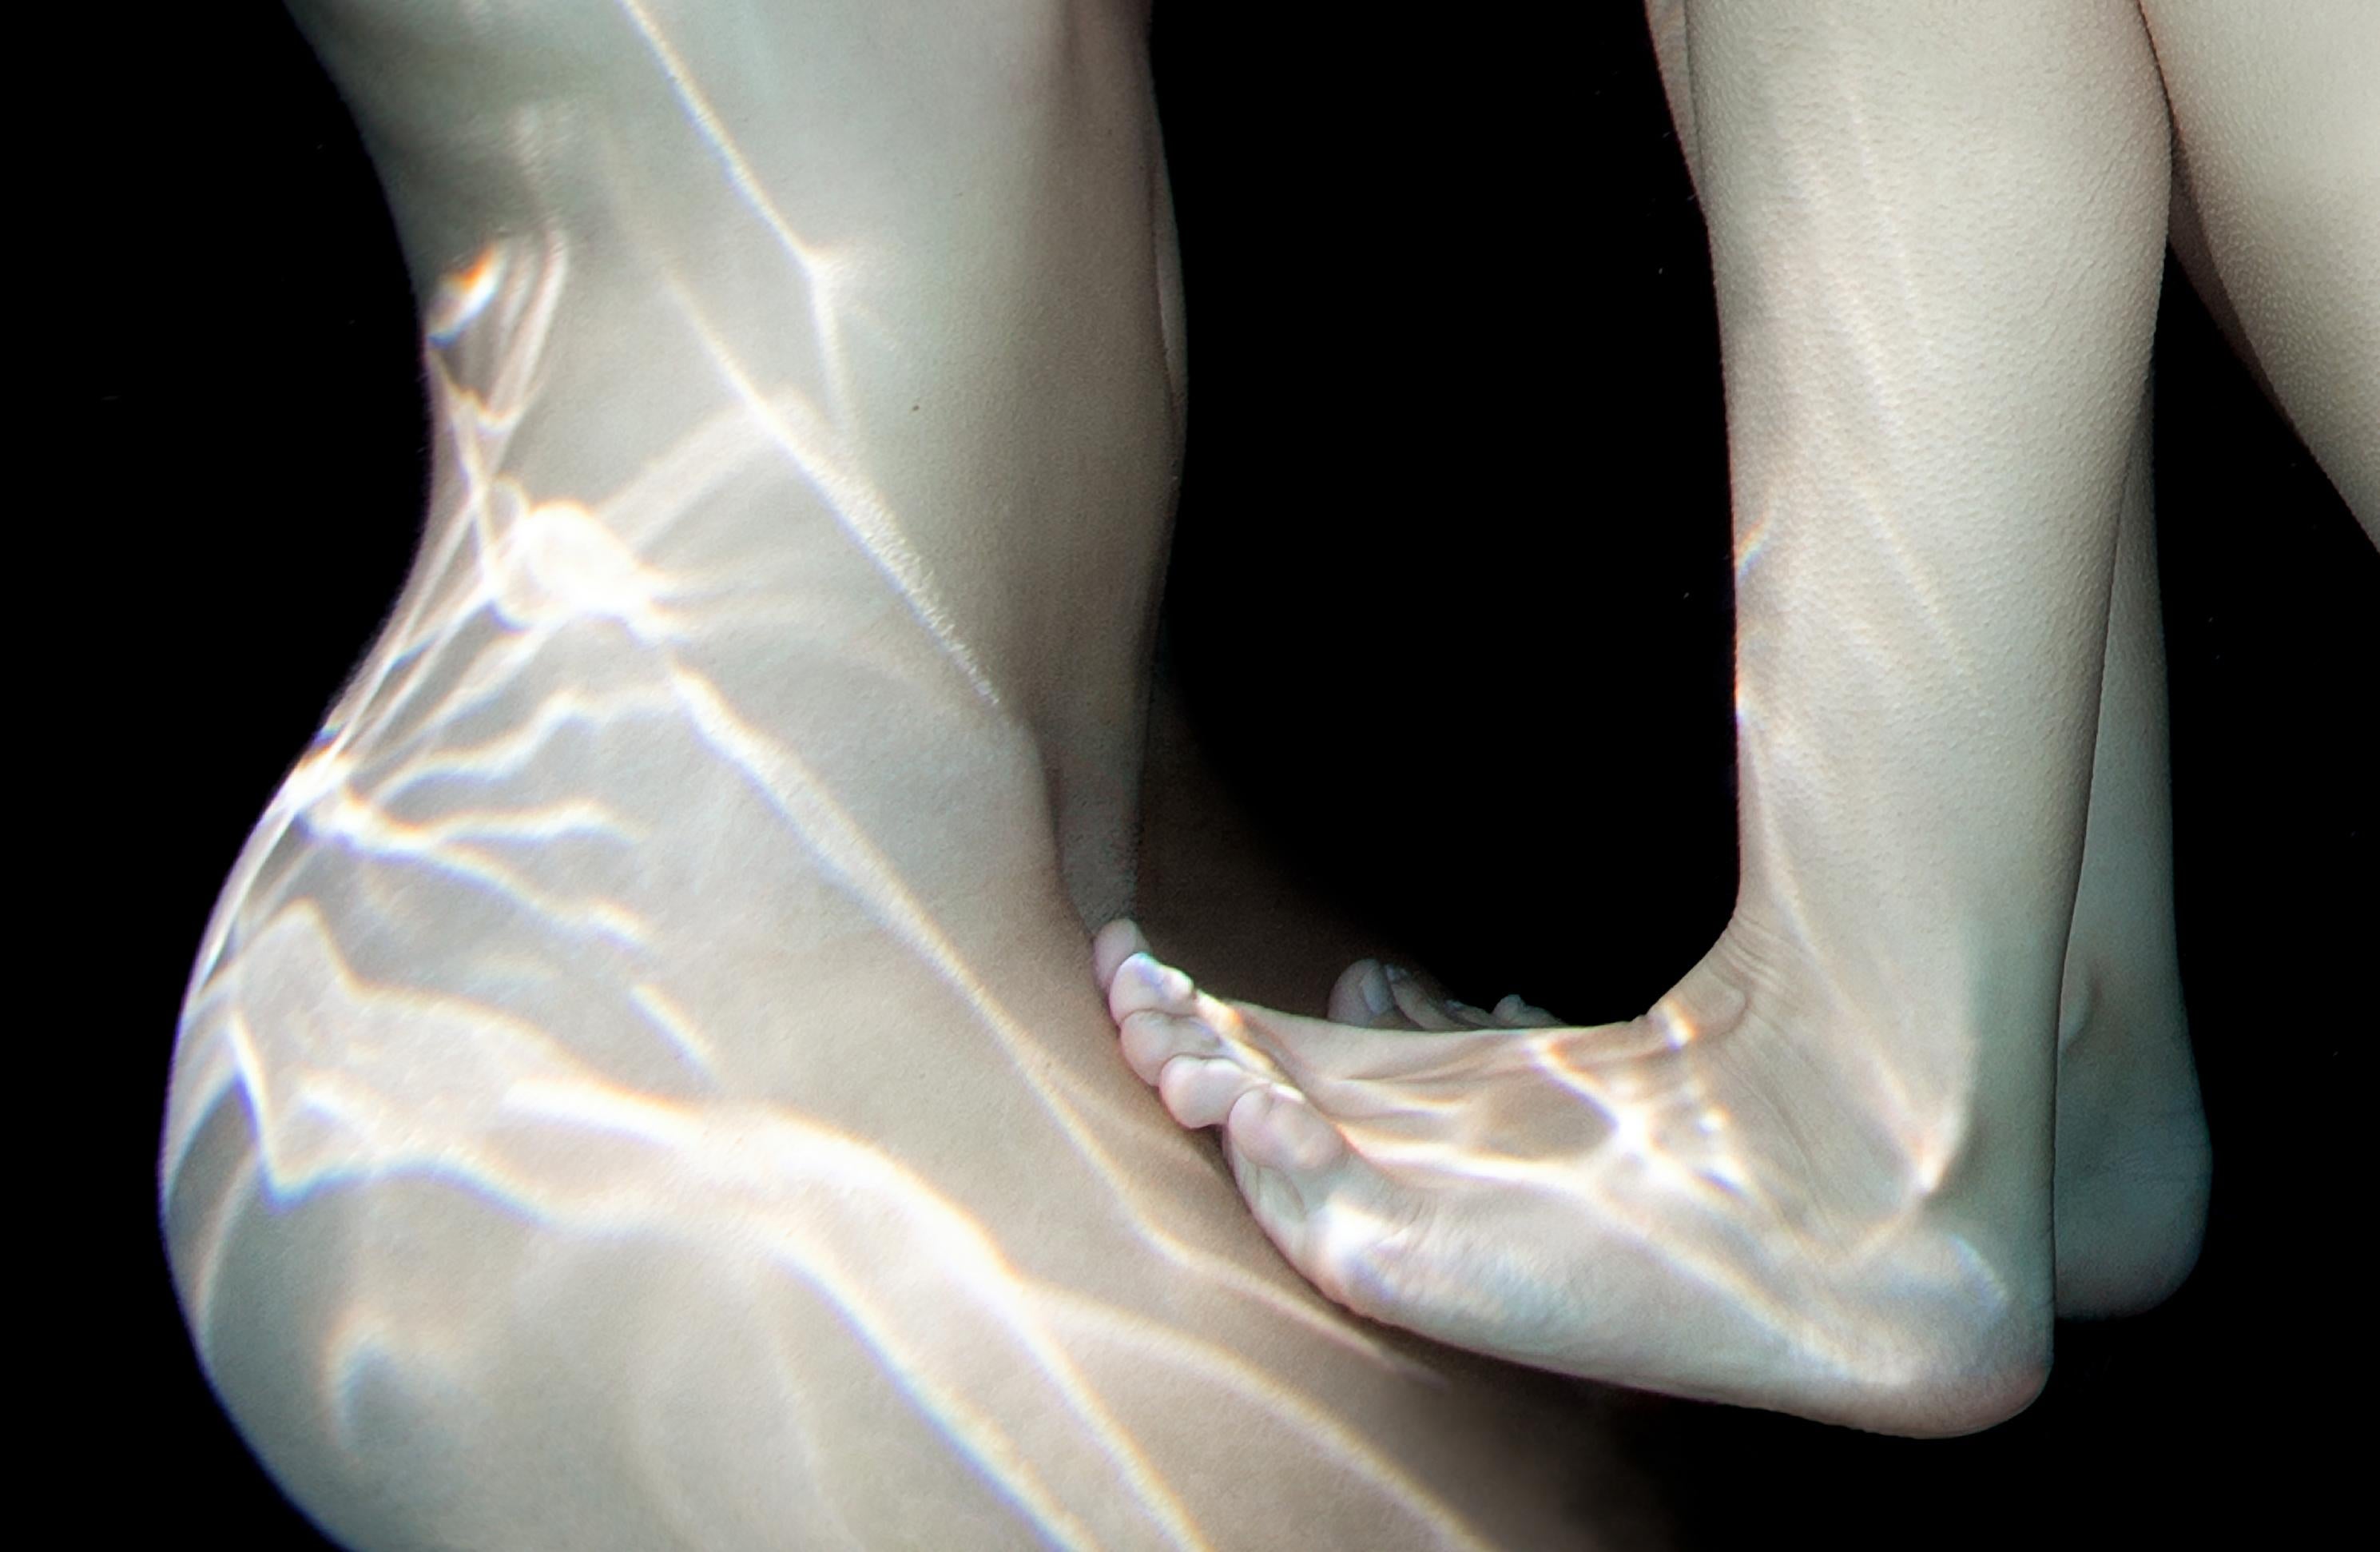 Porcelain - underwater nude photograph - acrylic print 24